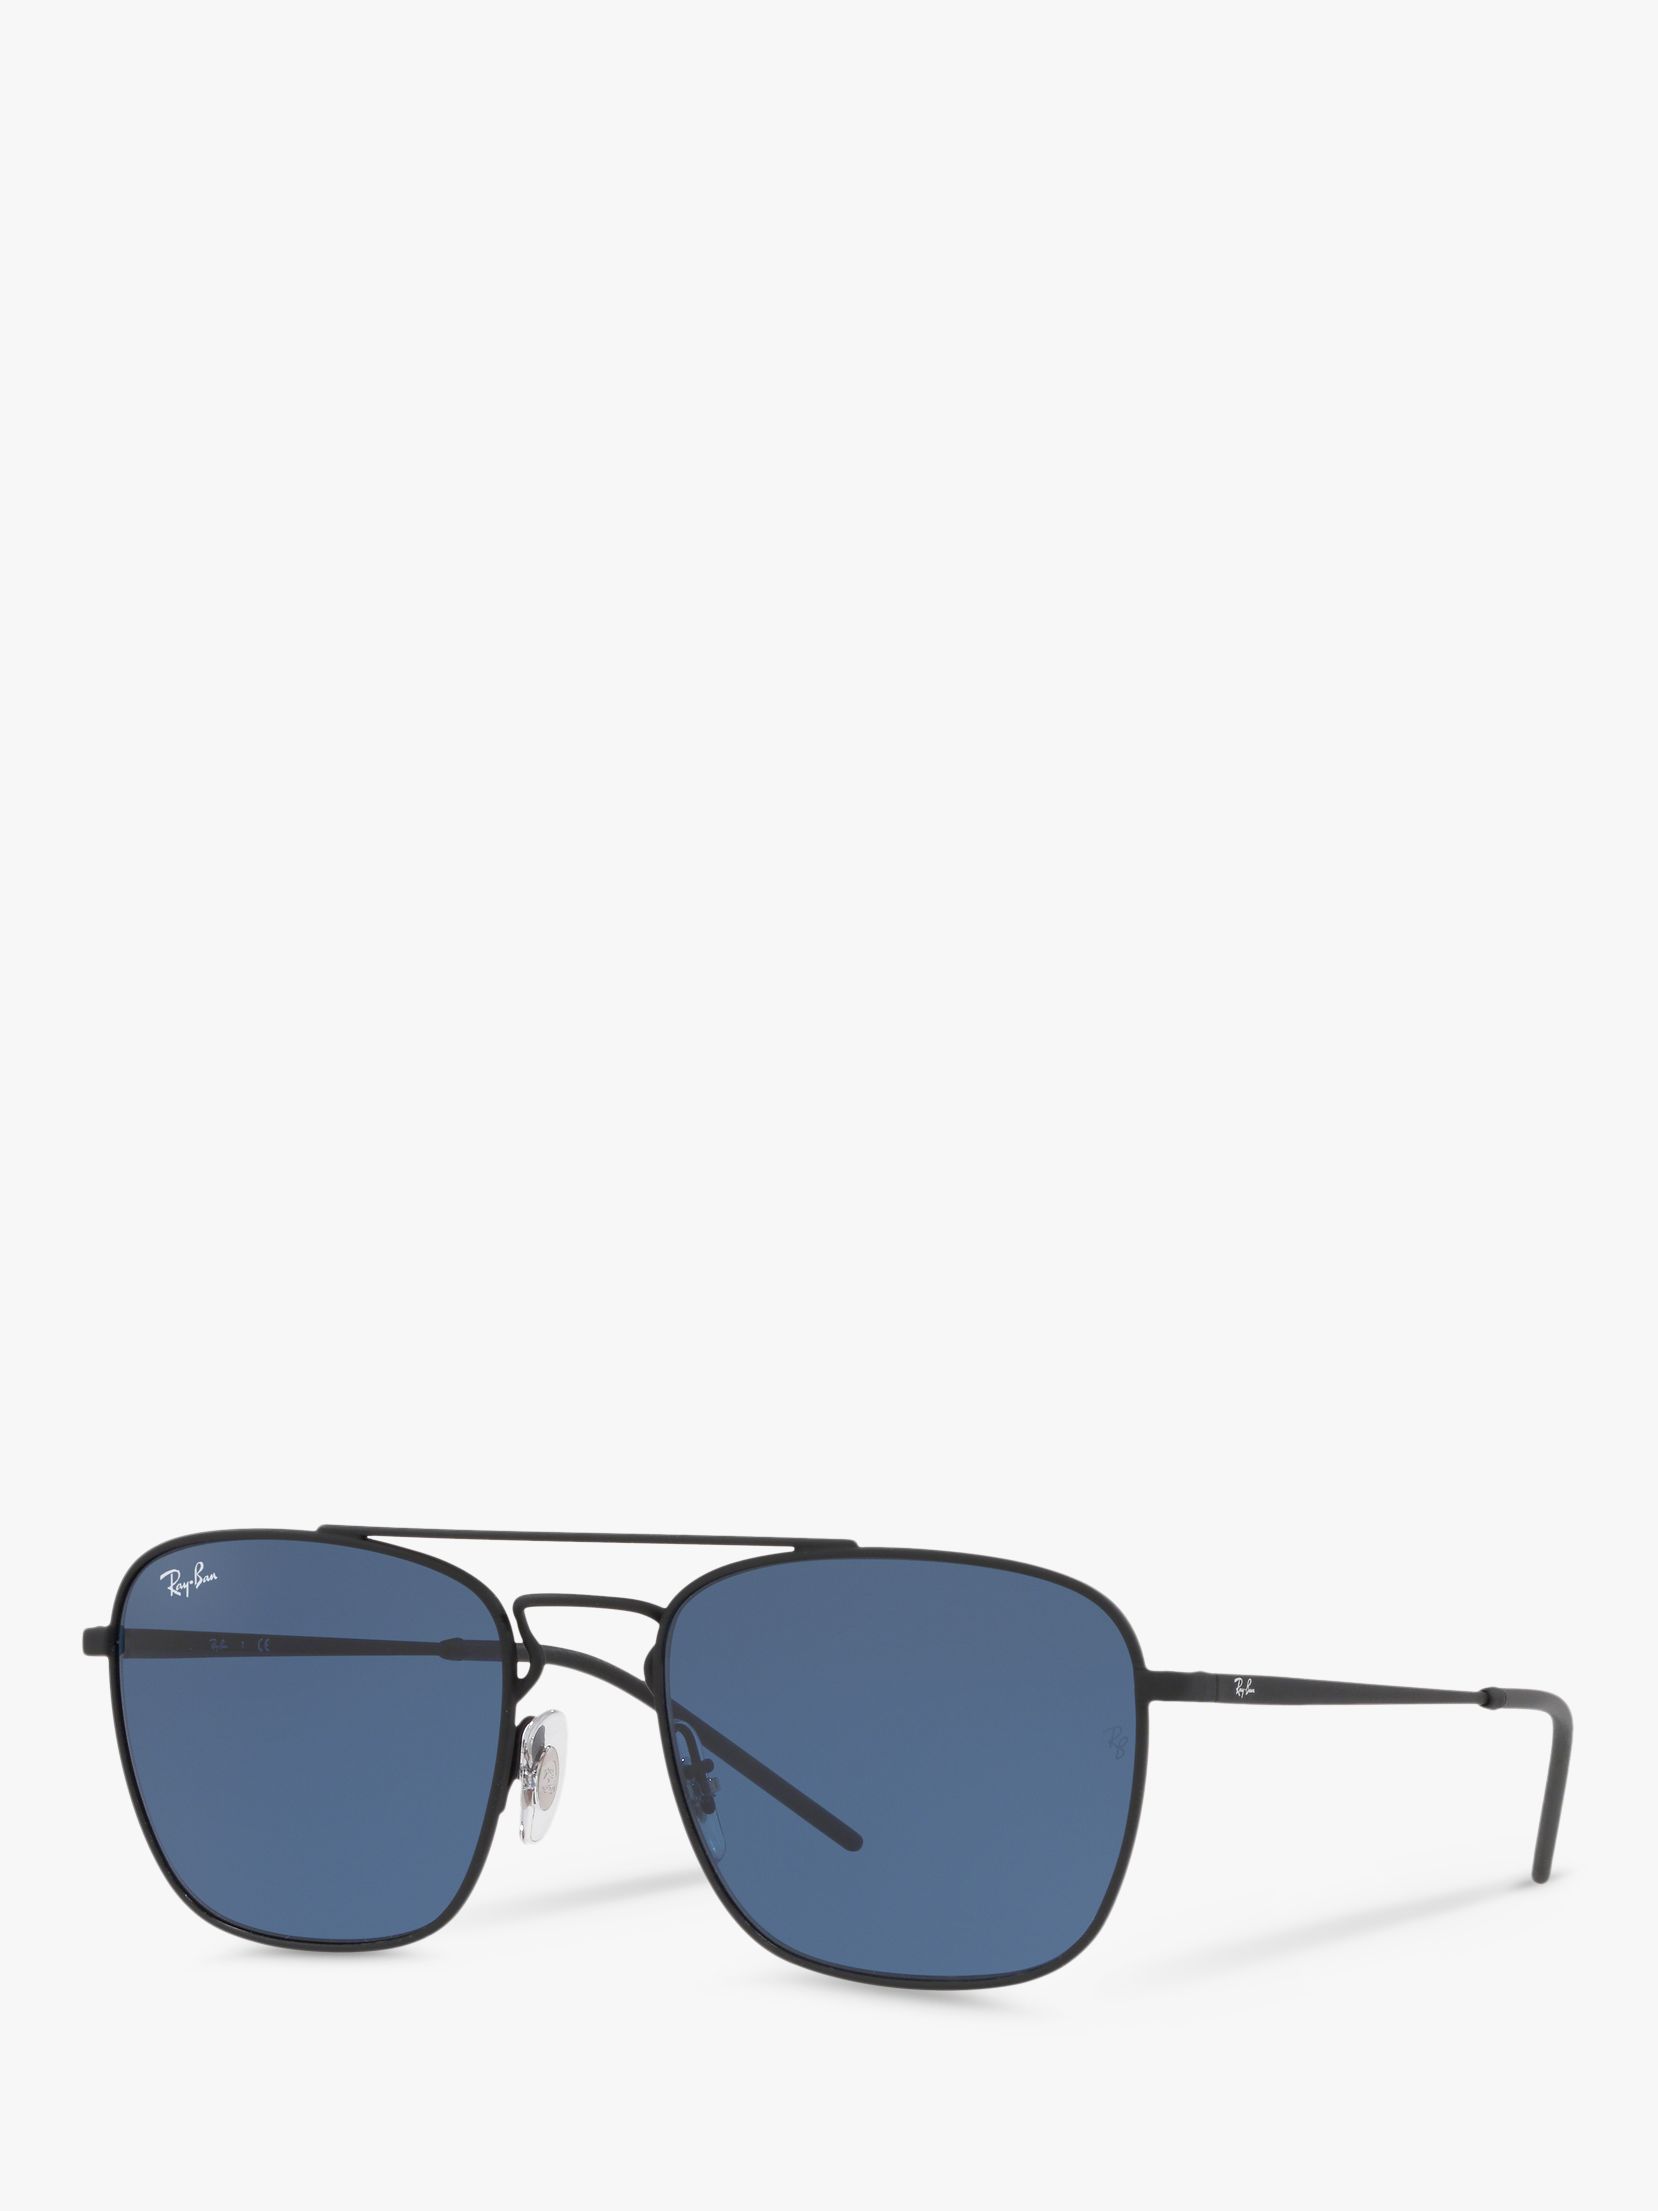 Ray-Ban RB3588 Men's Square Sunglasses, Black/Blue at John Lewis & Partners